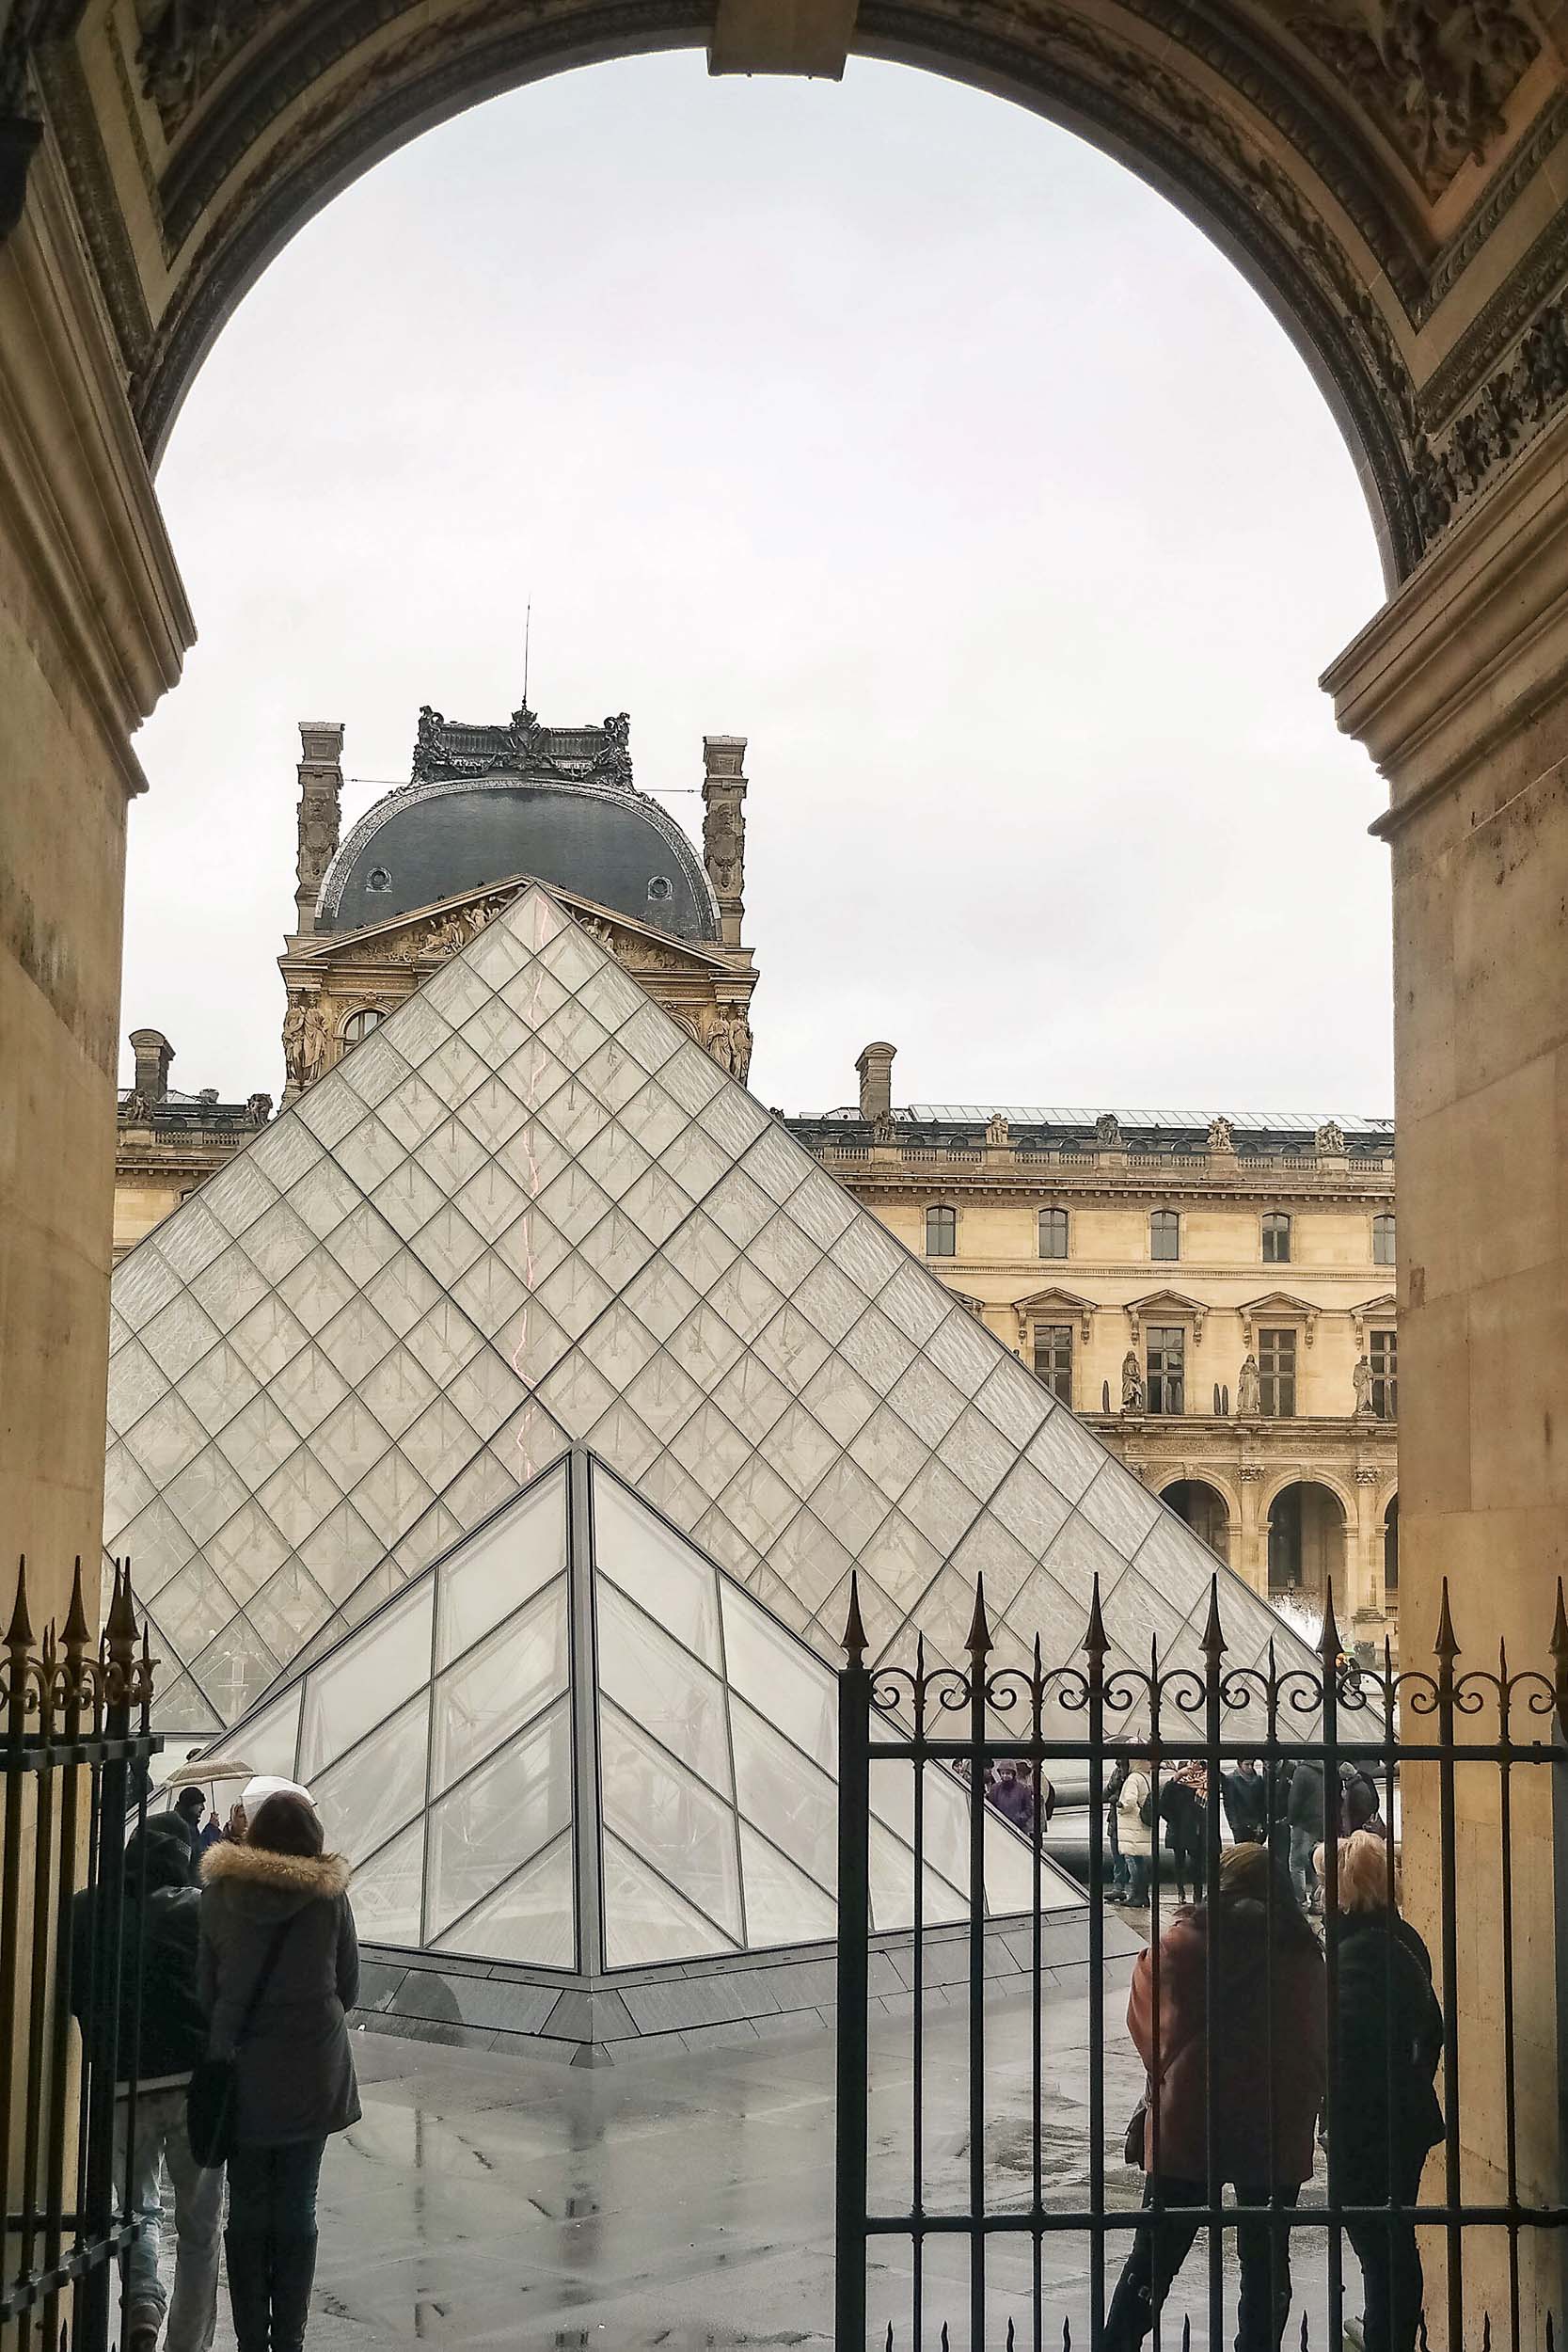 Rainy day Louvre views in Paris